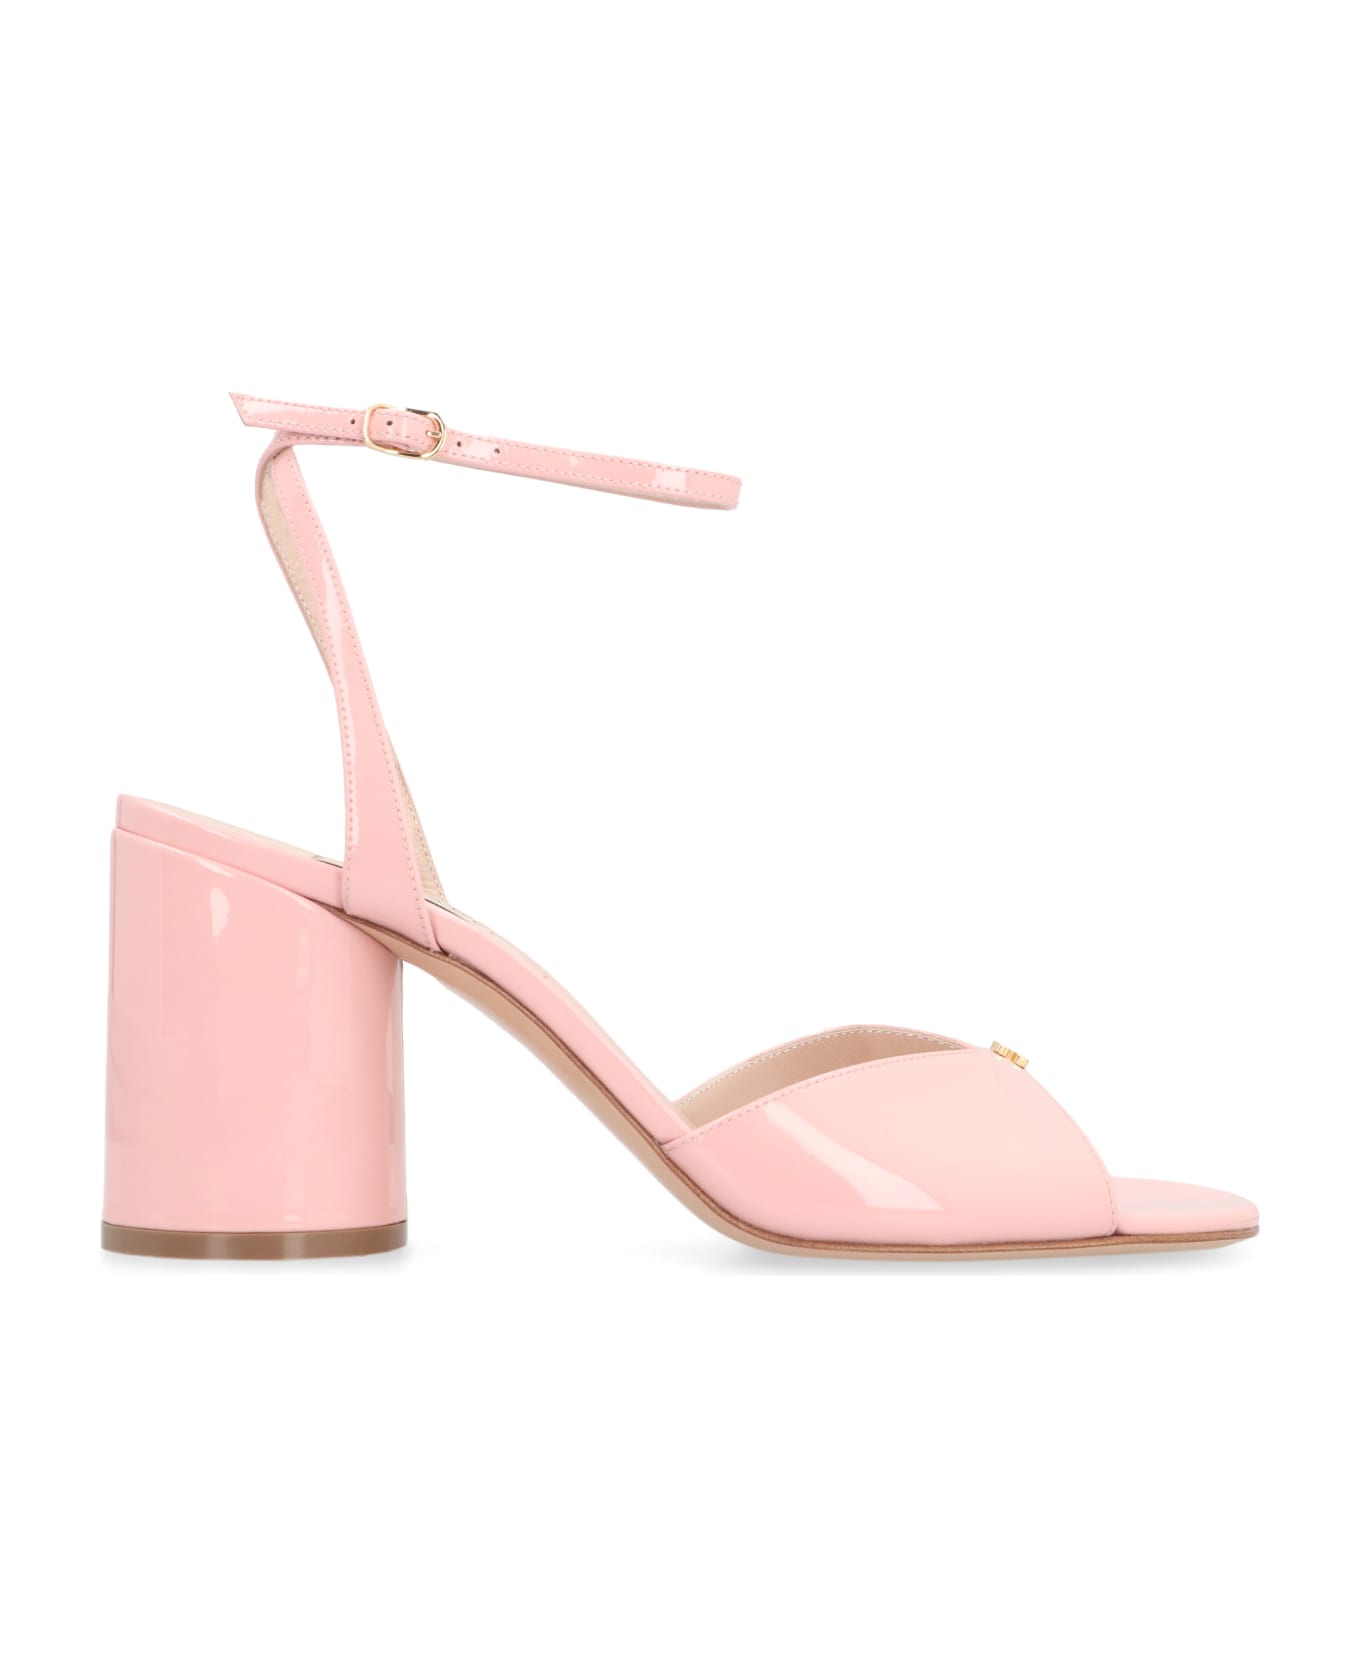 Casadei Tiffany Patent Leather Sandals - Pink サンダル